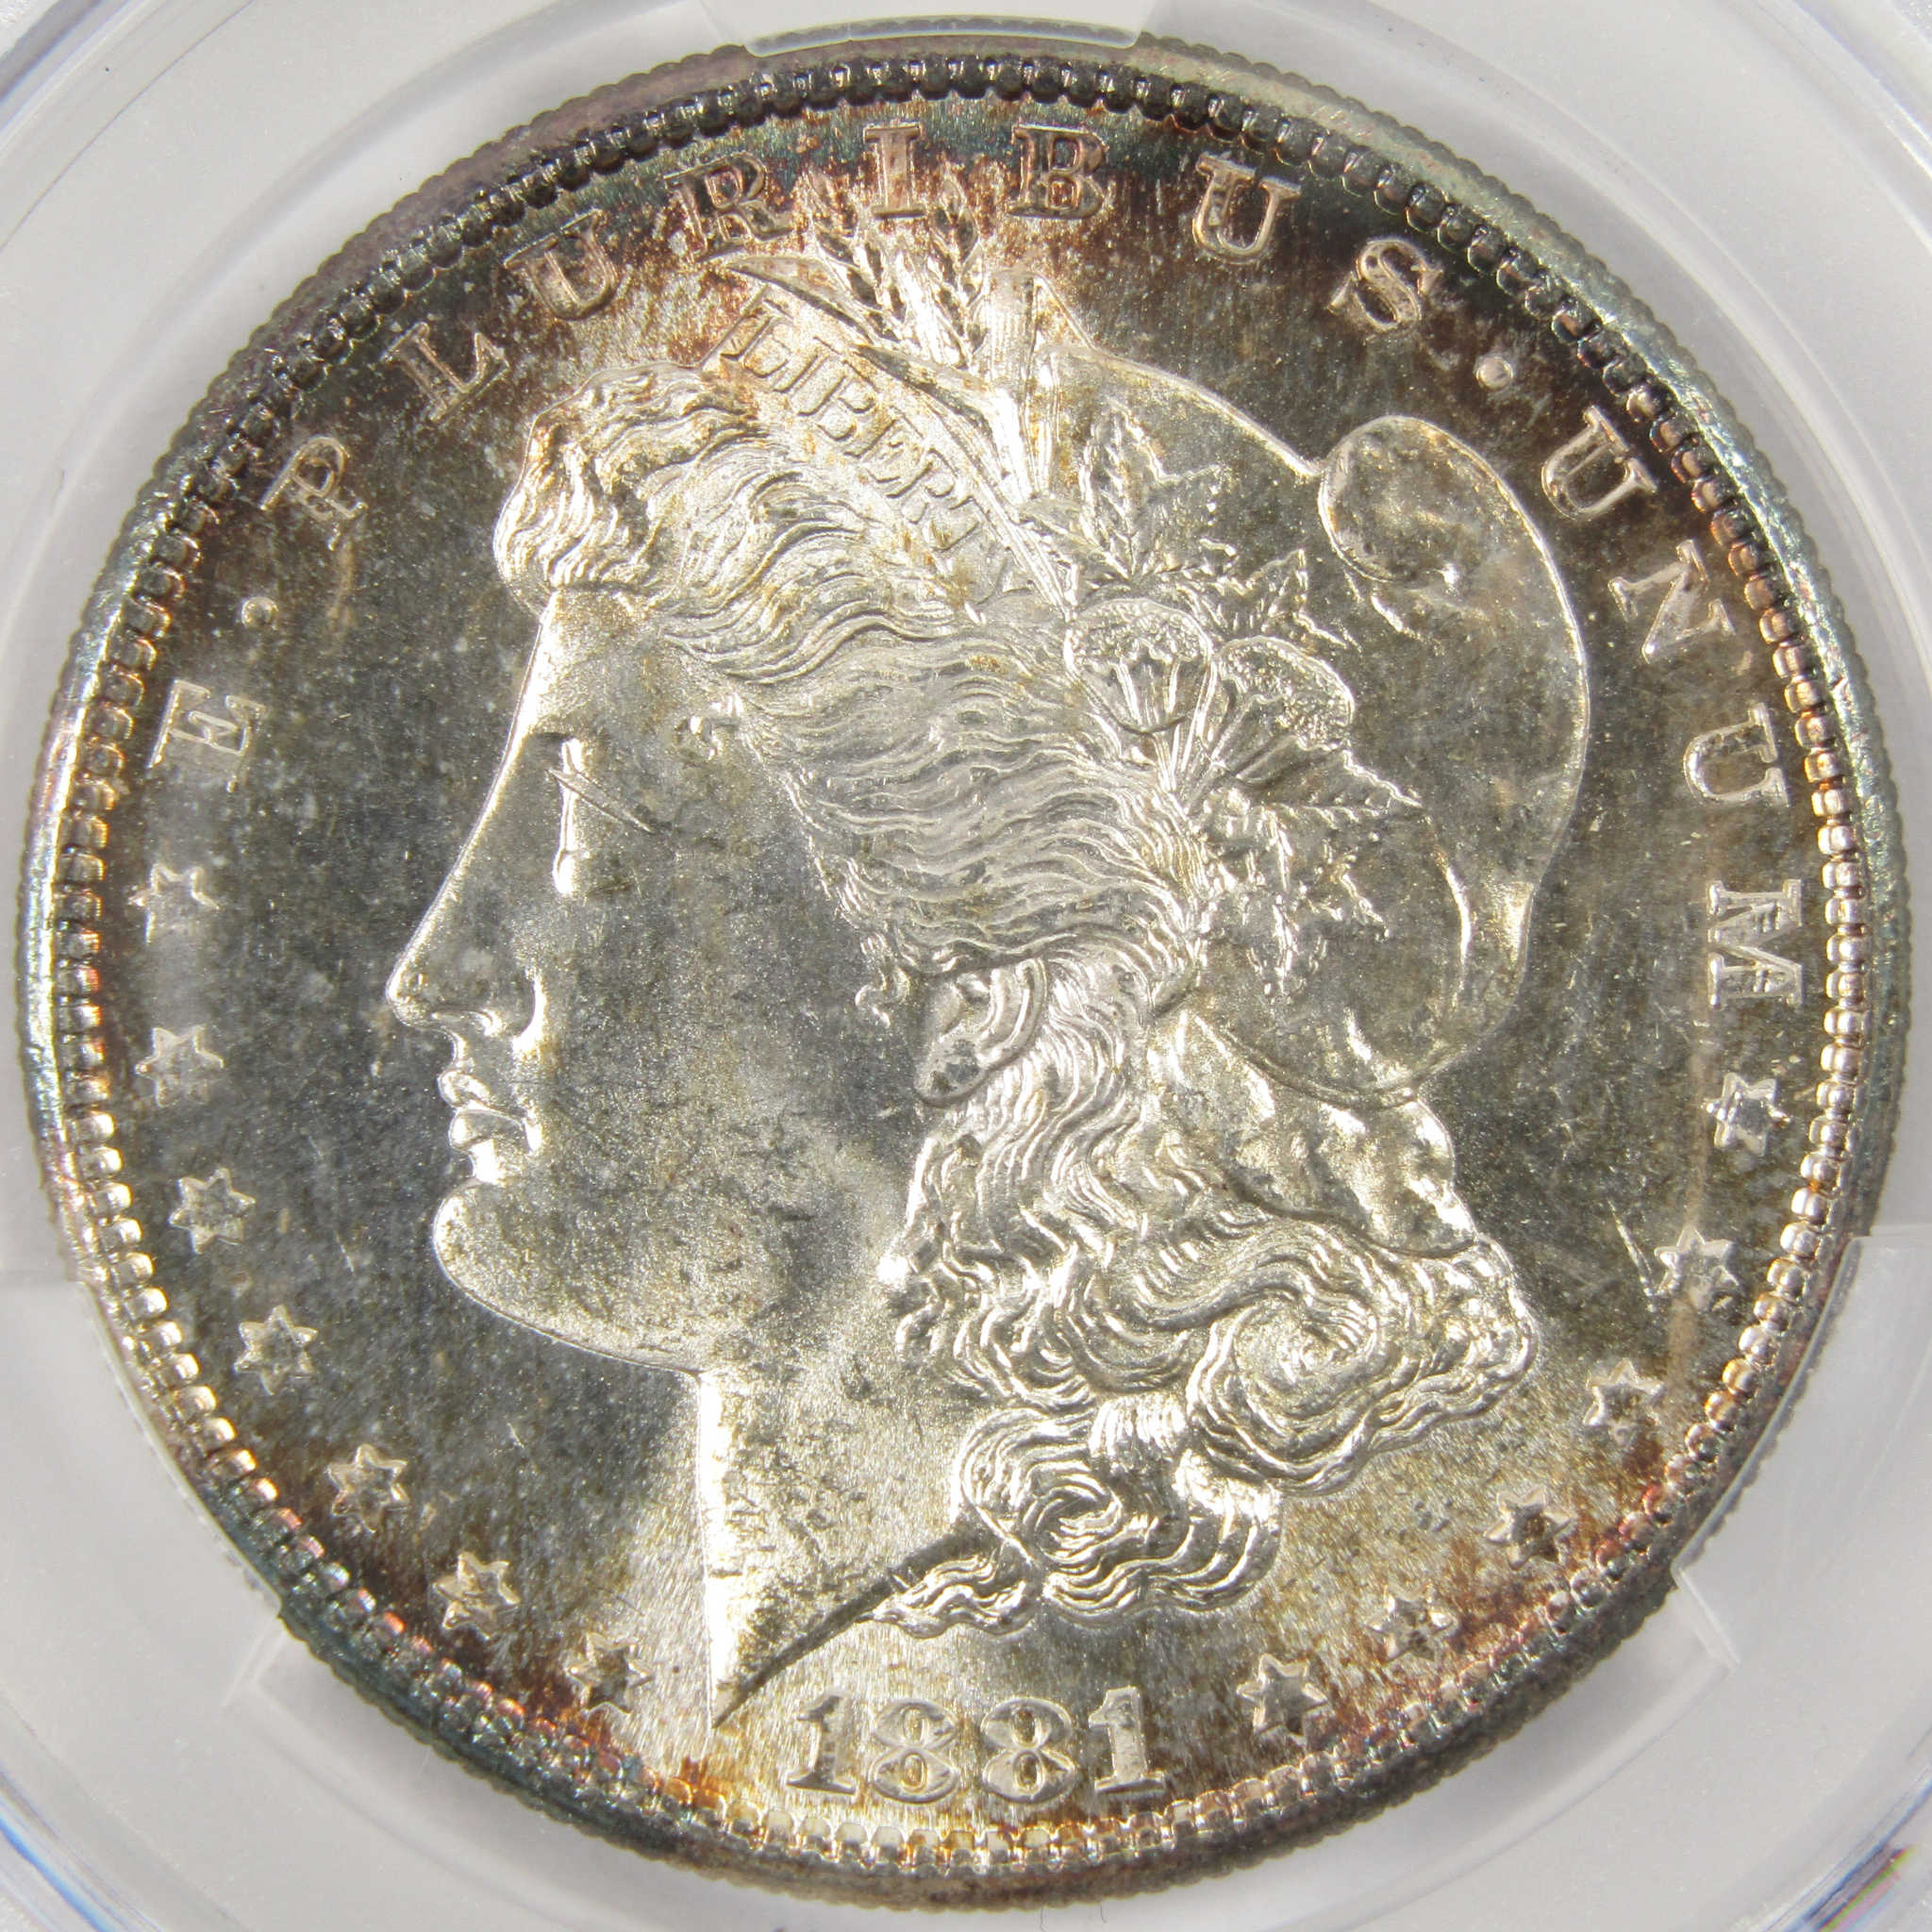 1881 S Morgan Dollar MS 64 CAC 90% Silver $1 Coin SKU:I9744 - Morgan coin - Morgan silver dollar - Morgan silver dollar for sale - Profile Coins &amp; Collectibles